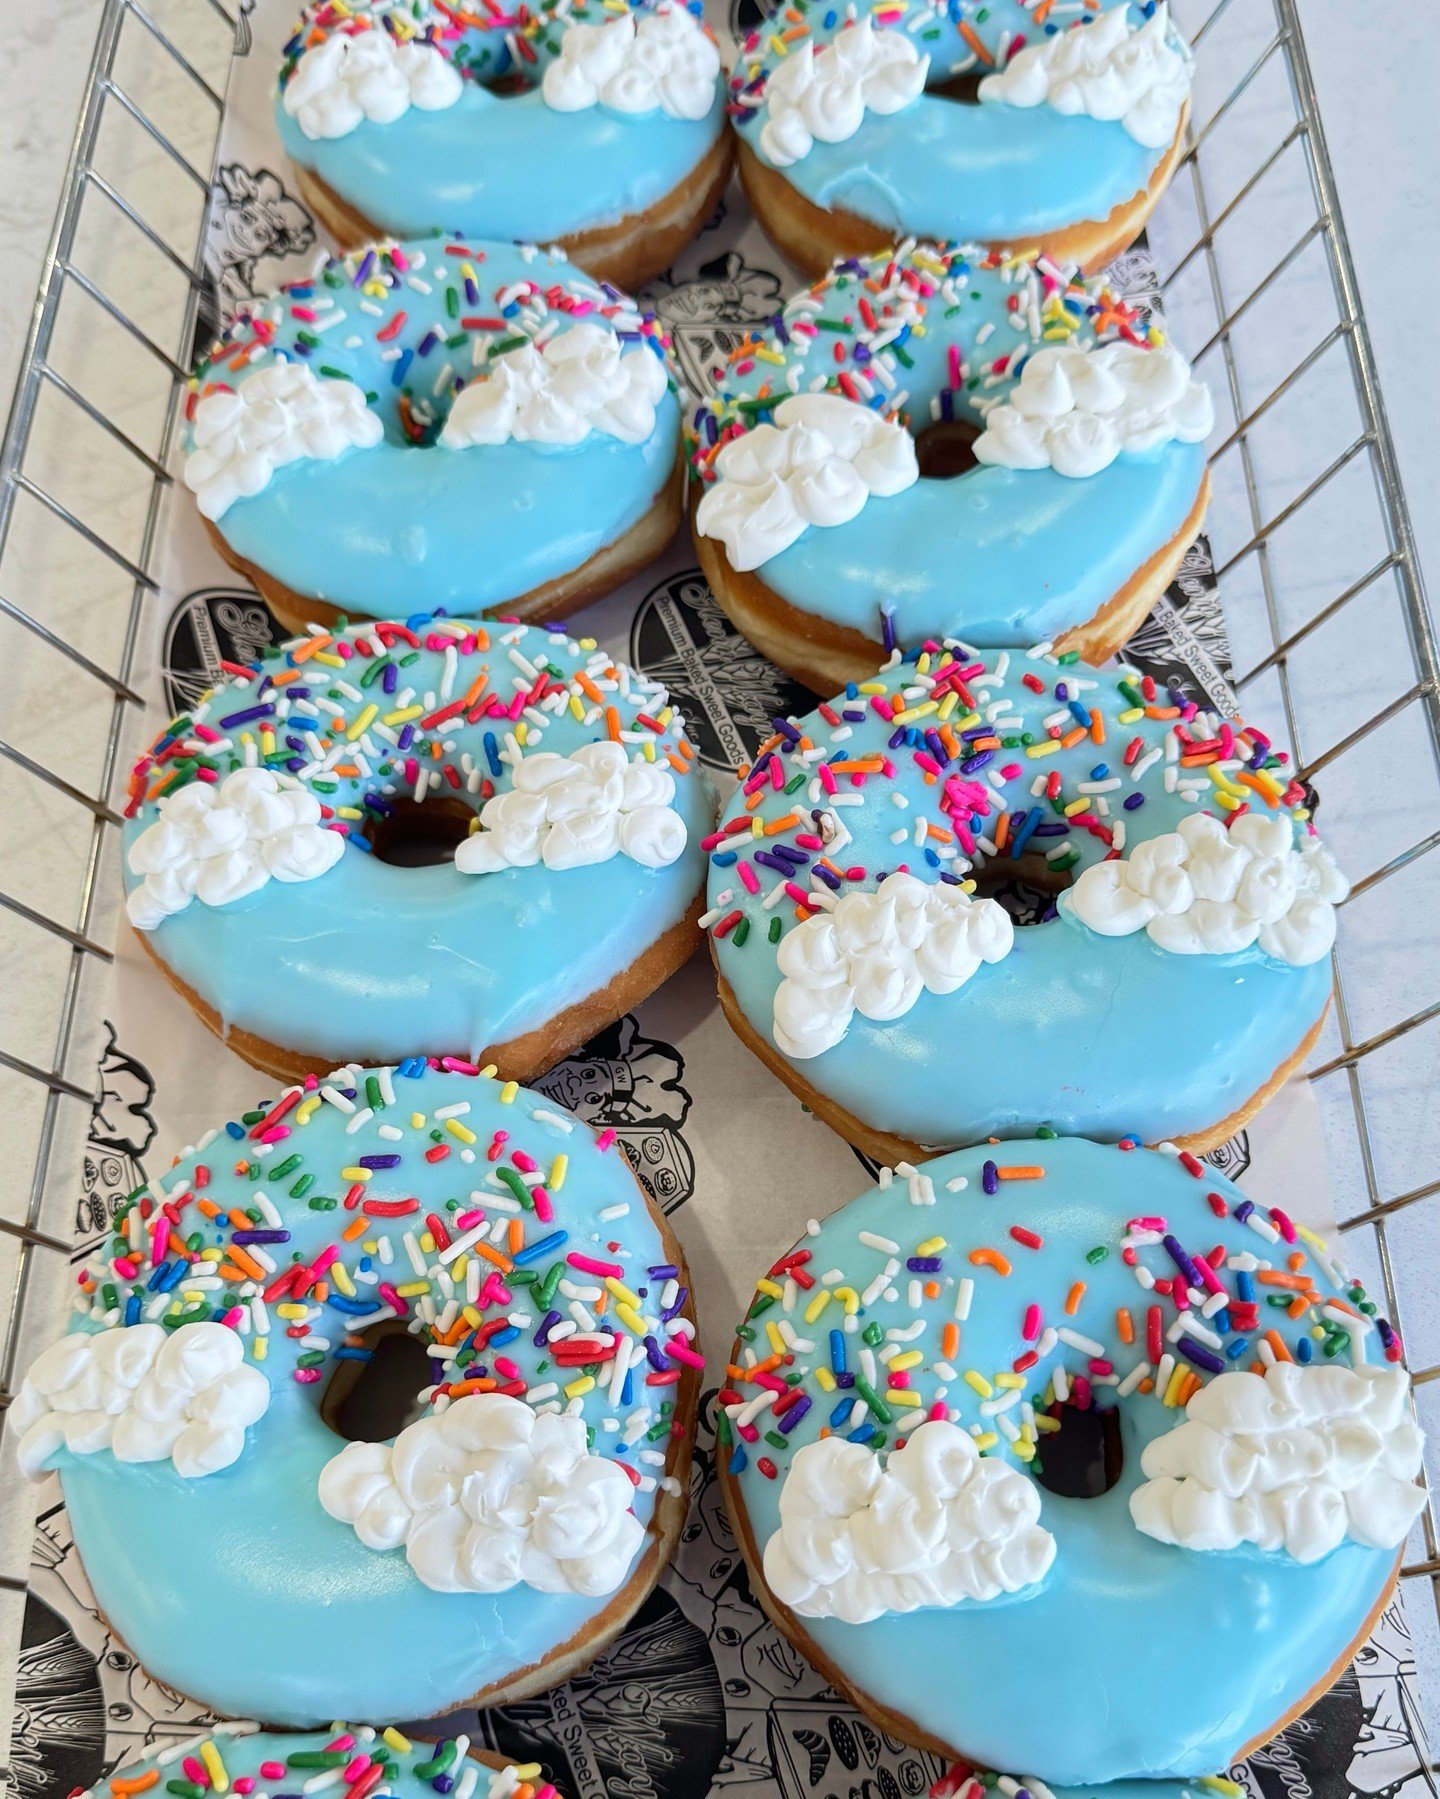 🌈🍩💐 Grab our exclusive Rainbow donut, available this week only at Glenn Wayne Bakery.

📍 Bohemia, NY
📞 631-256-5140
📞 631-319-6266
🌐 www.GlennWayne.com

#Bakery #Donuts #GlennWayneBakery #LongIsland #LongIslandEats #MothersDay #NewYork #Rainbo